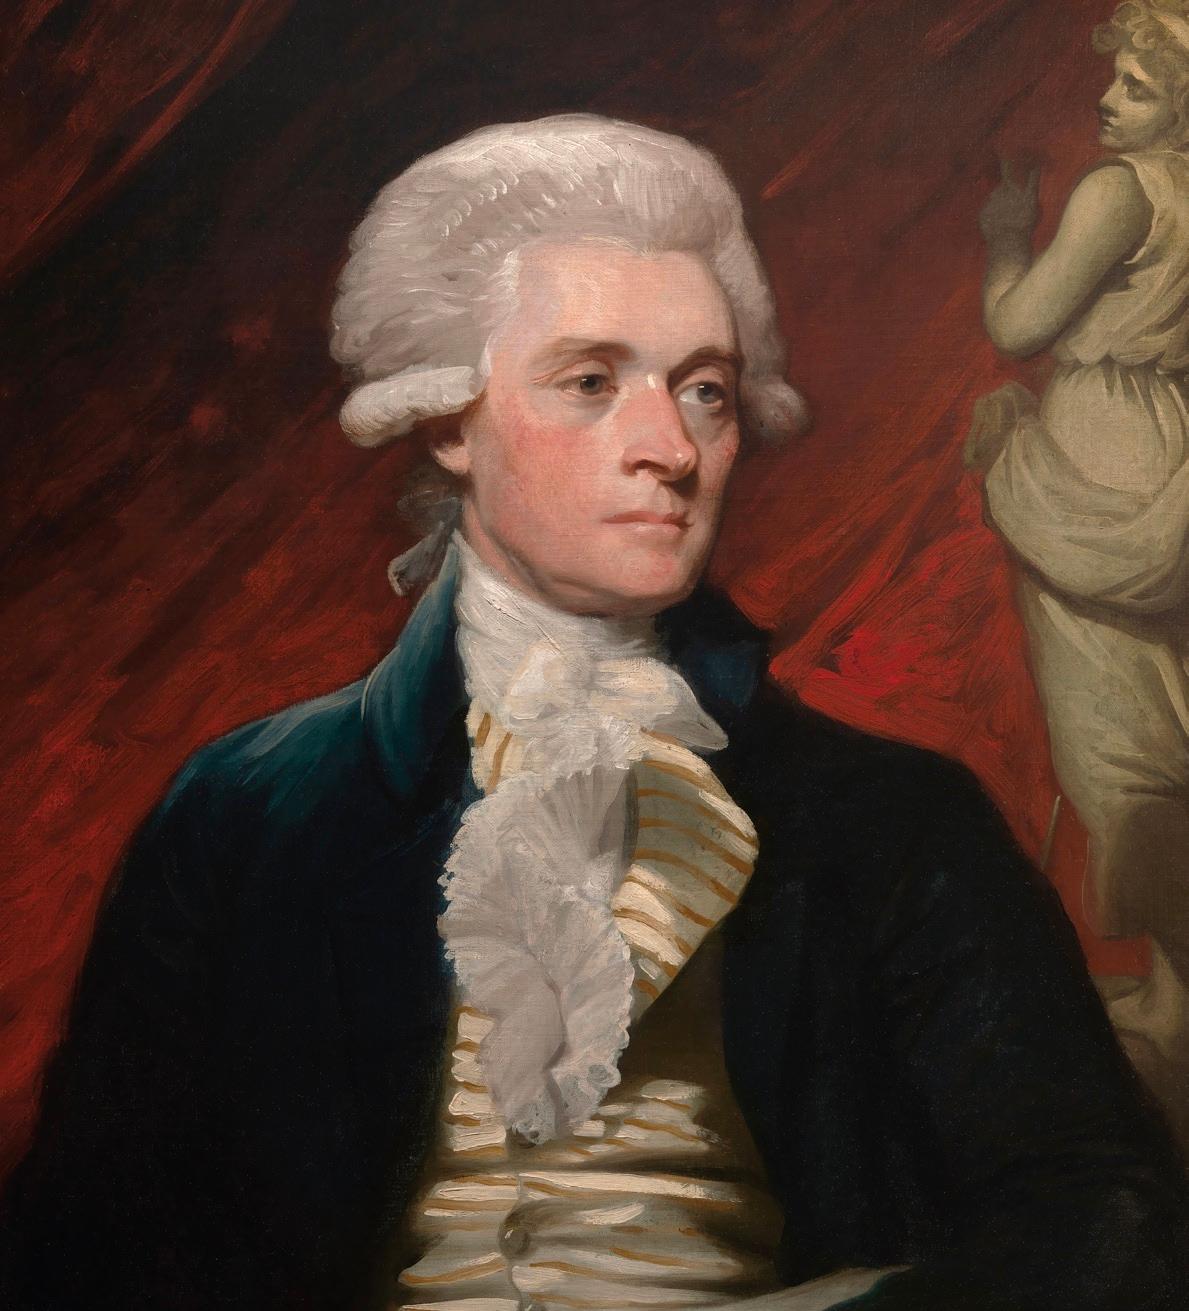 “Thomas Jefferson” by Mather Brown, 1786. National Portrait Gallery, Washington, D.C. (Public domain)